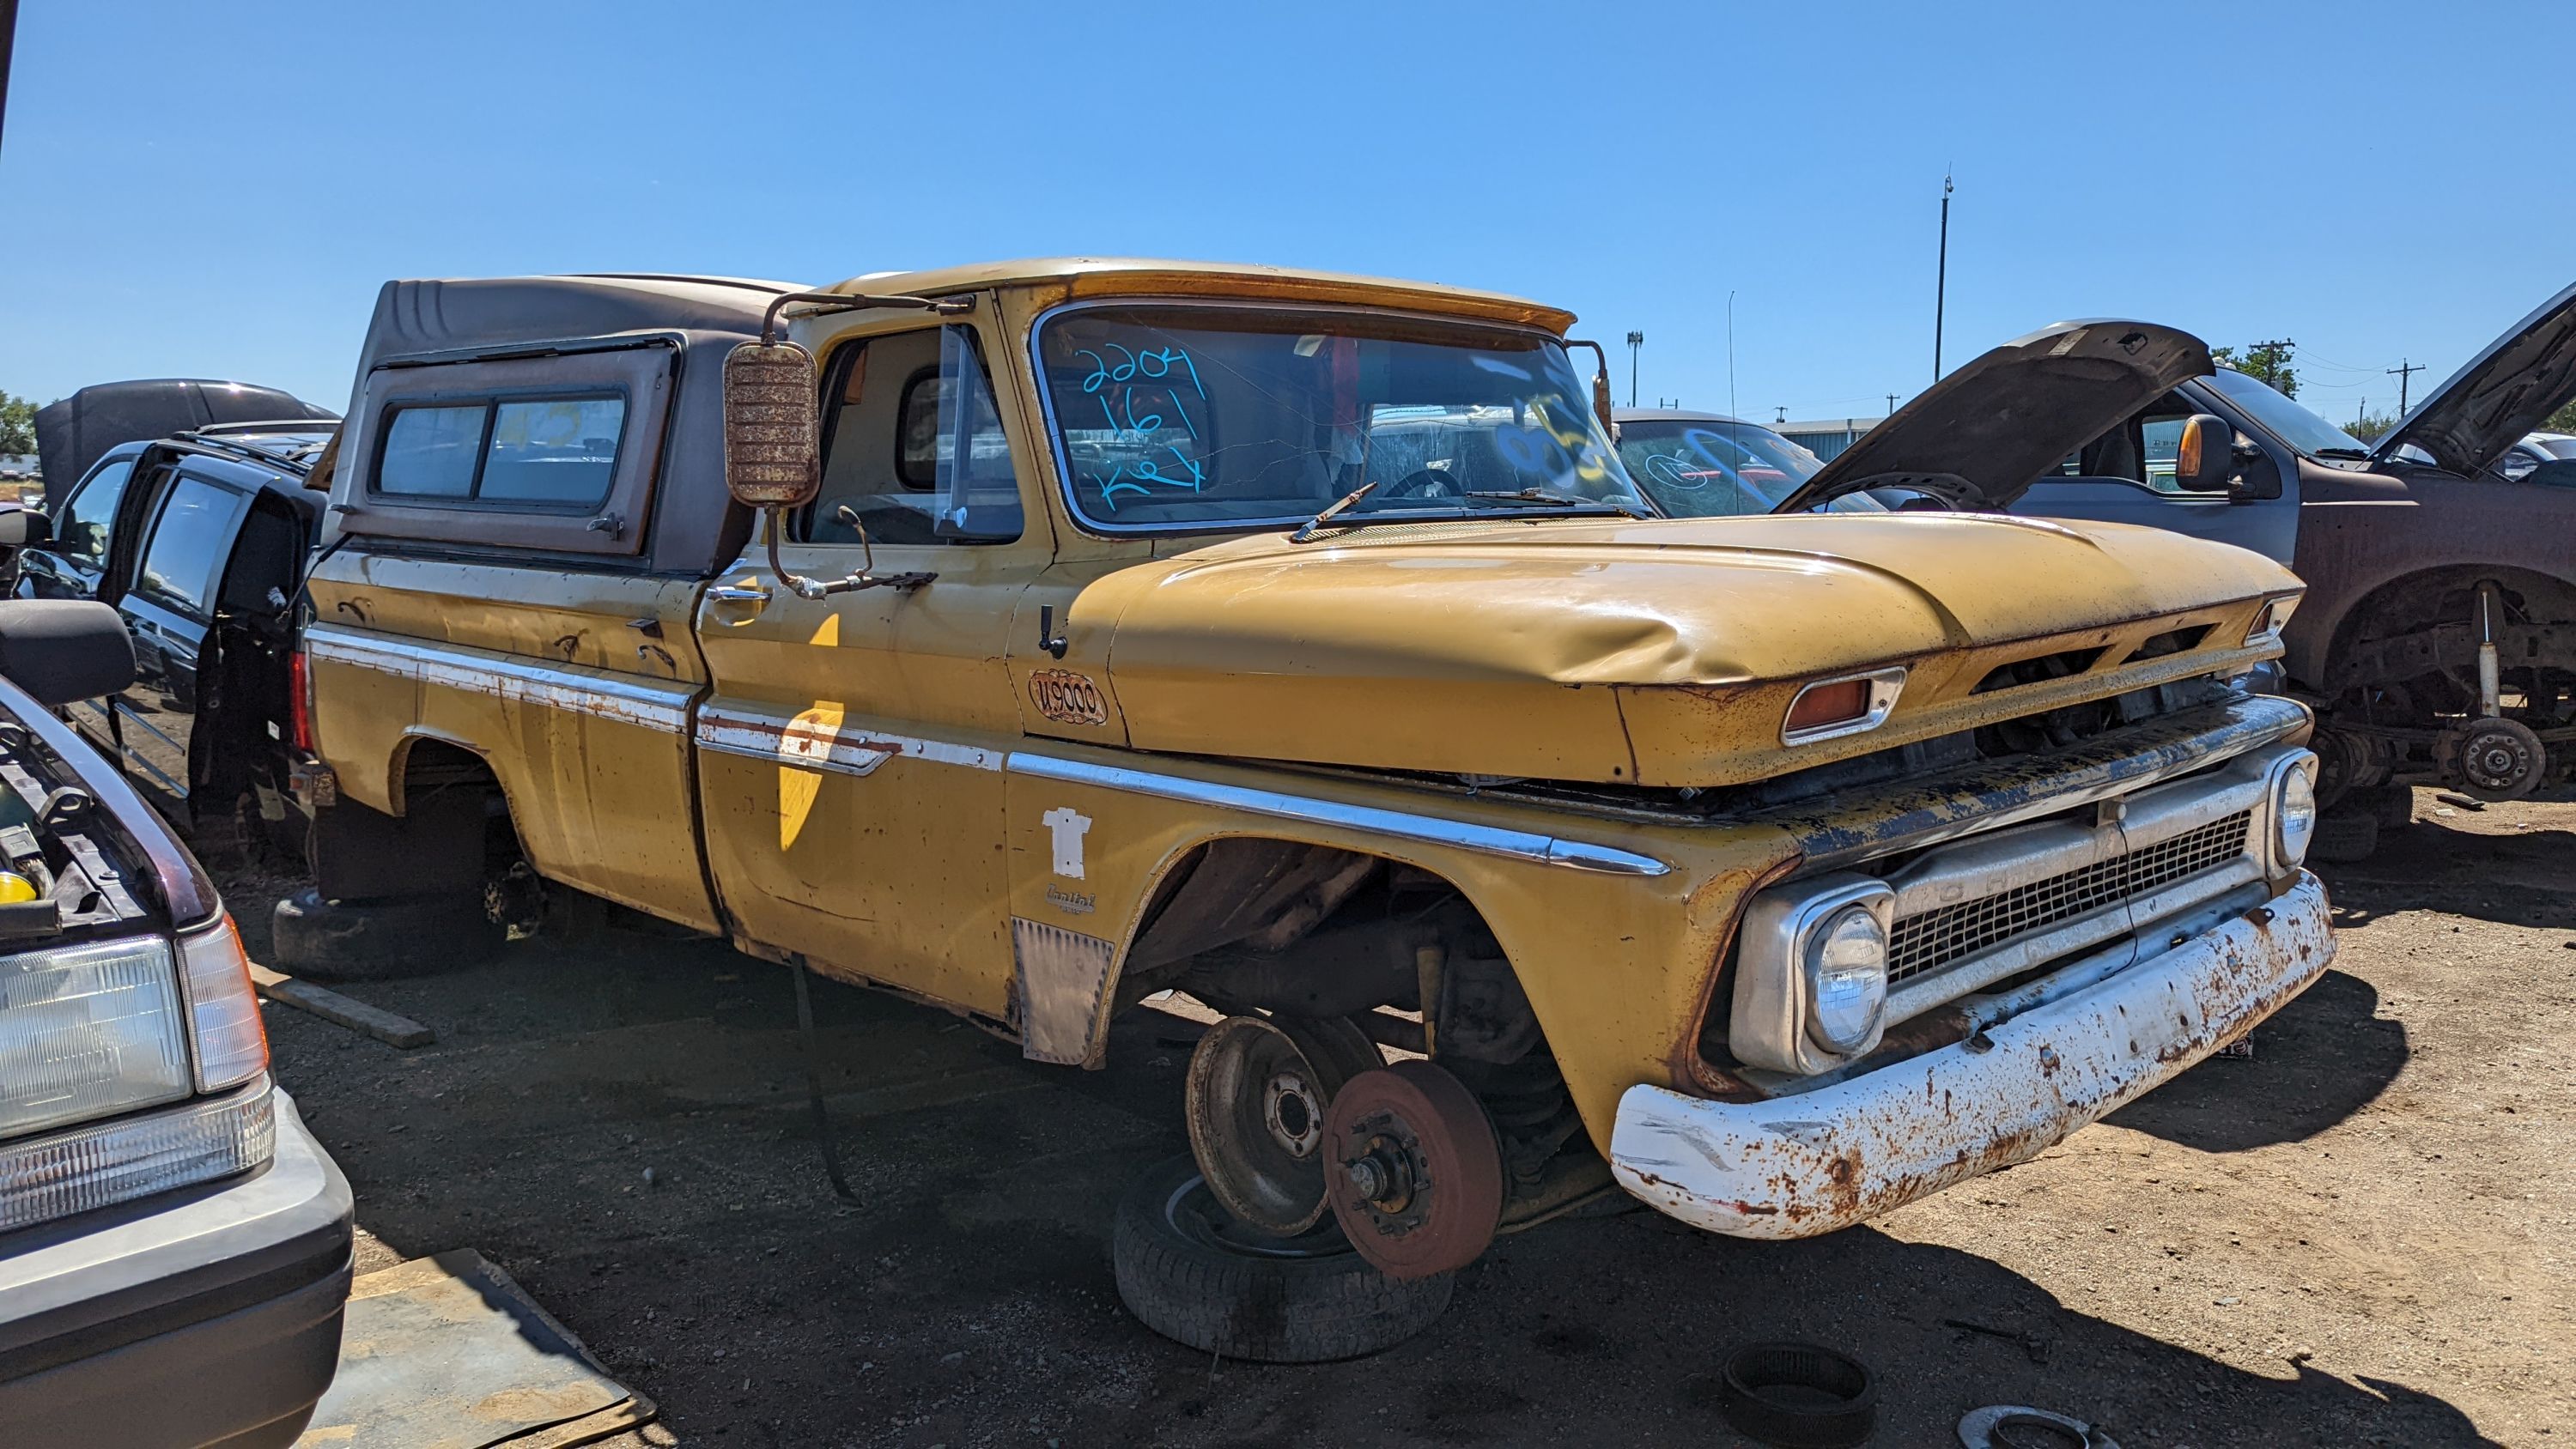 59 - 1964 Chevrolet C20 Pickup in Colorado junkyard - Photo by Murilee Martin